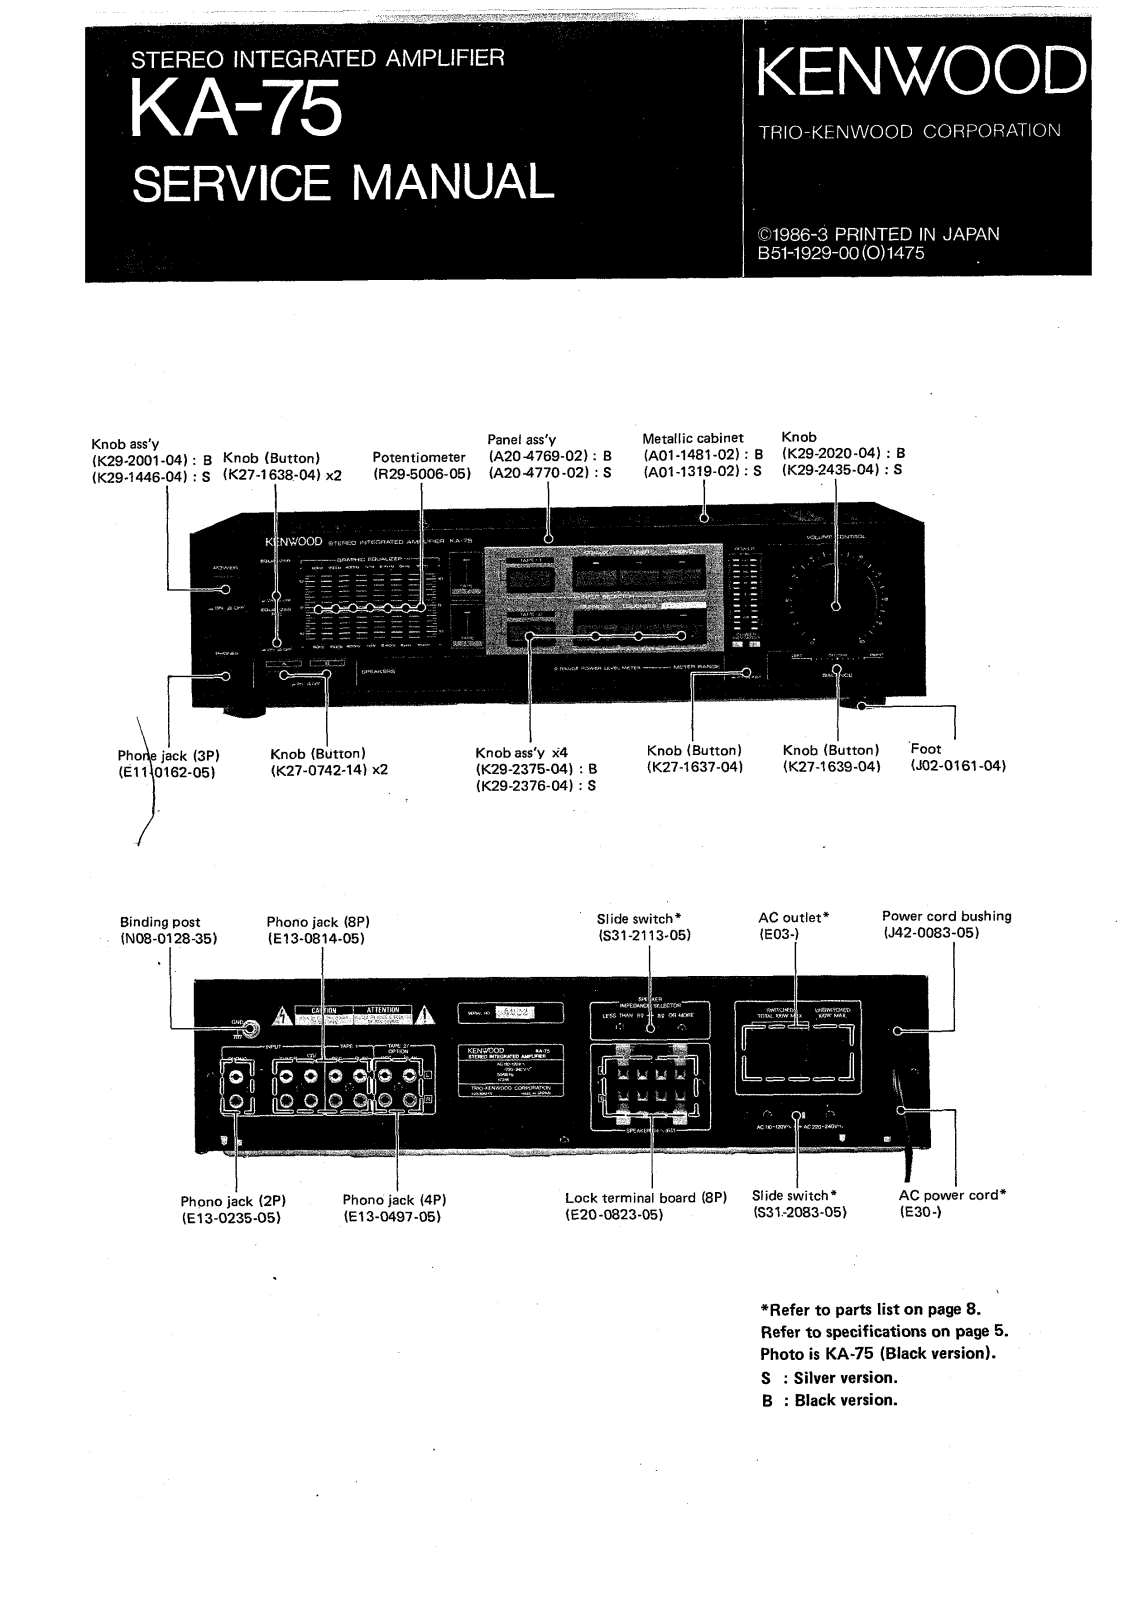 Kenwood KA-75 Service manual